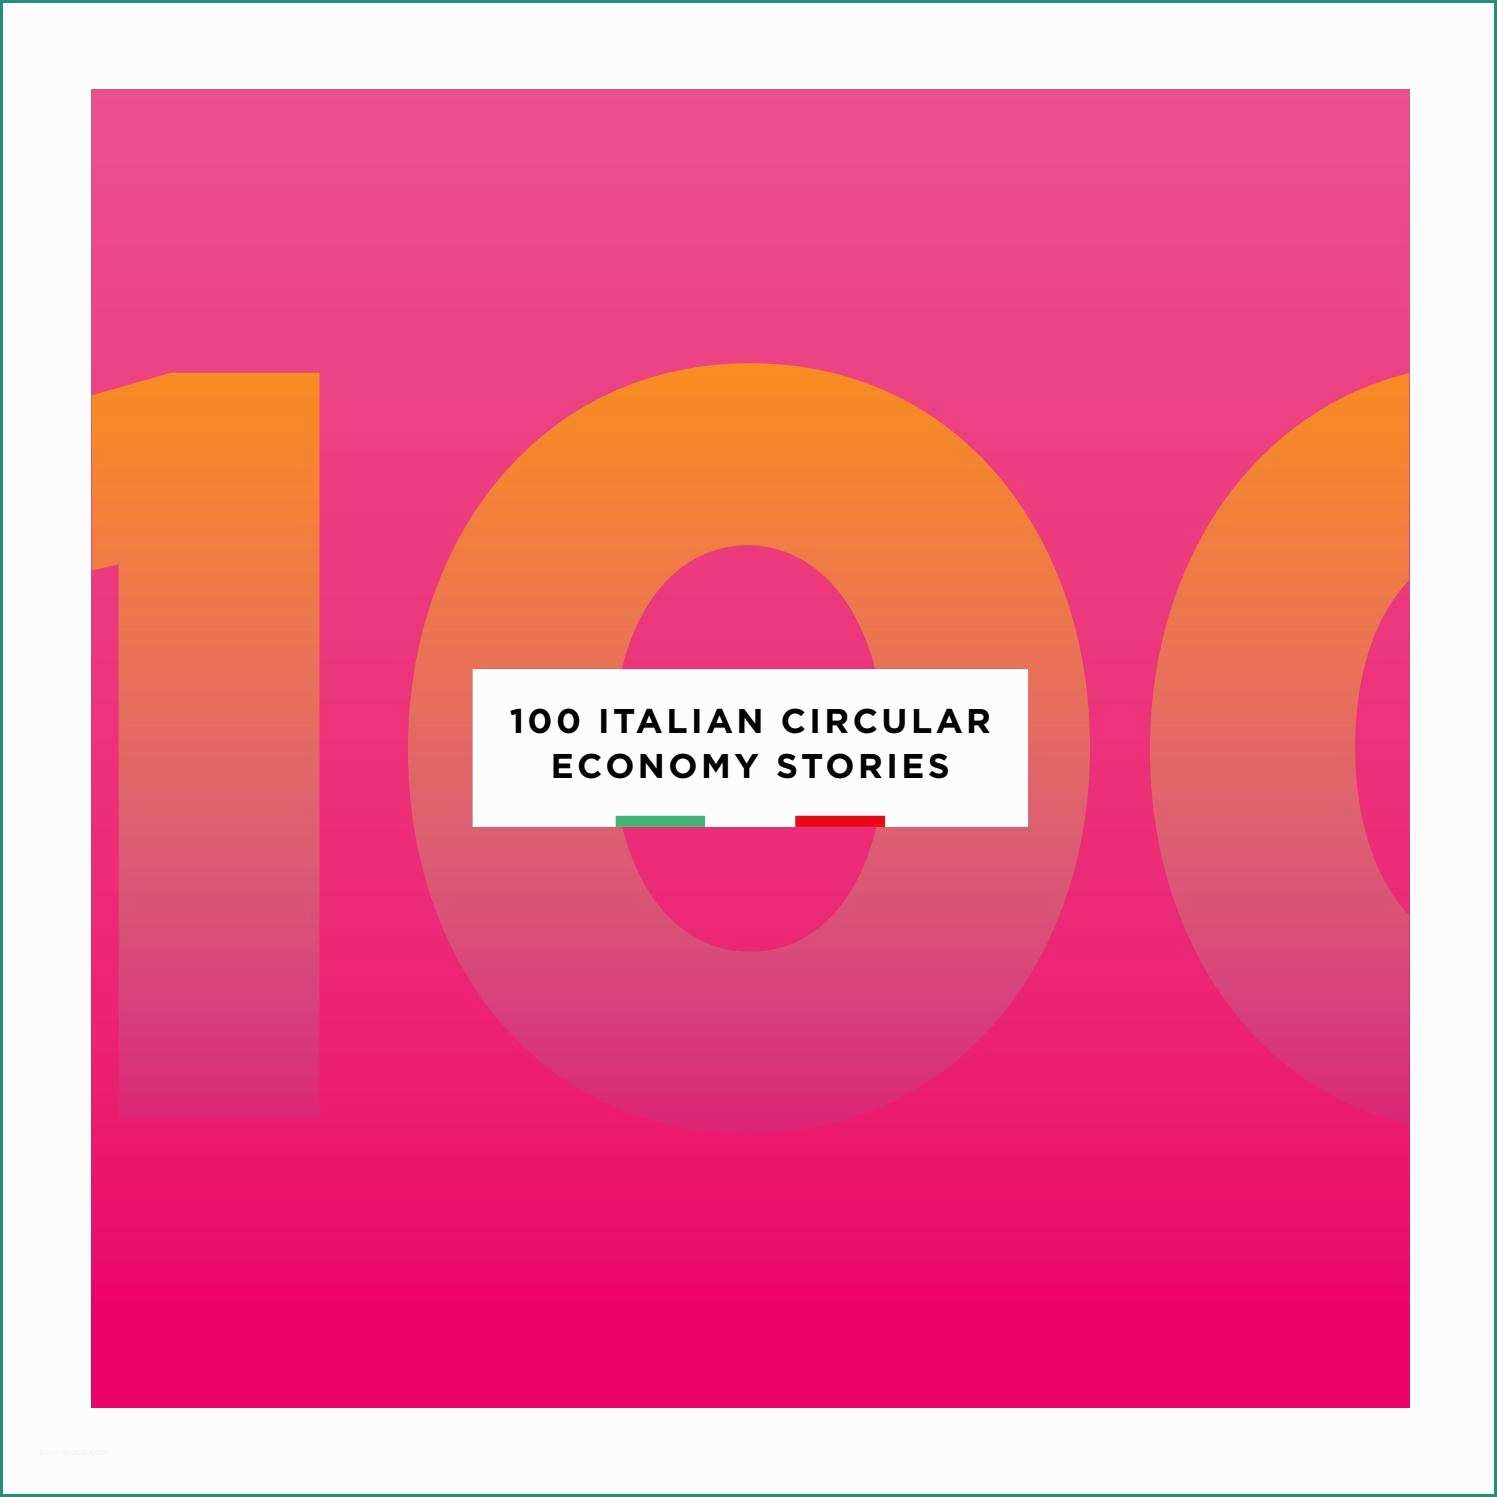 Arredo Ingross Opinioni E 100 Italian Circular Economy Stories by Fondazione Symbola issuu